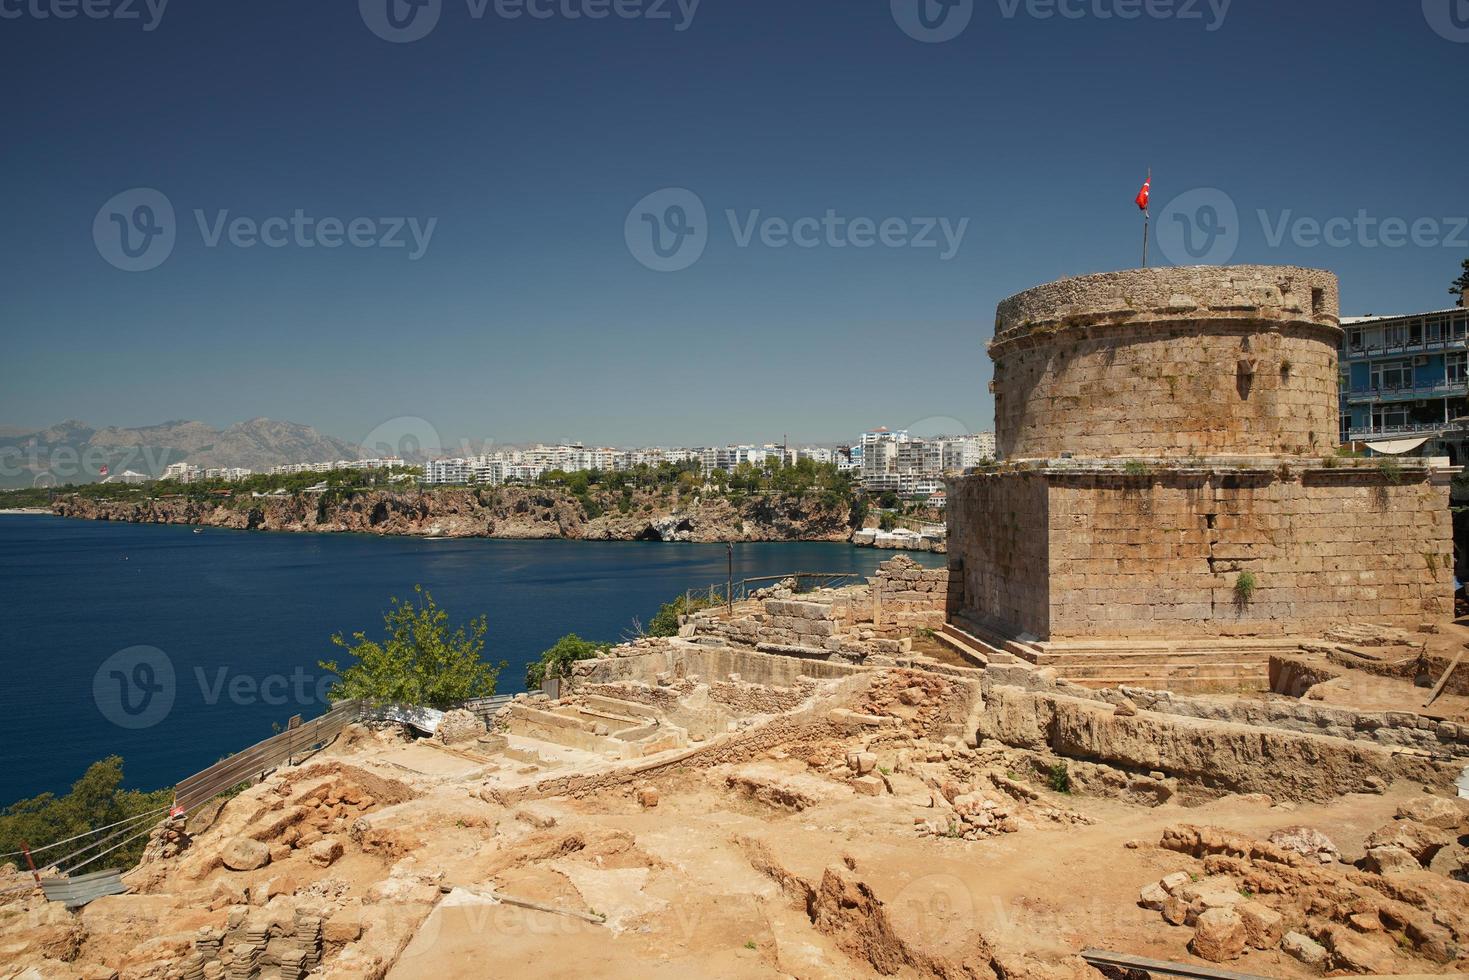 hidirlik Torre e archeologico scavo nel antalya vecchio cittadina, turkiye foto